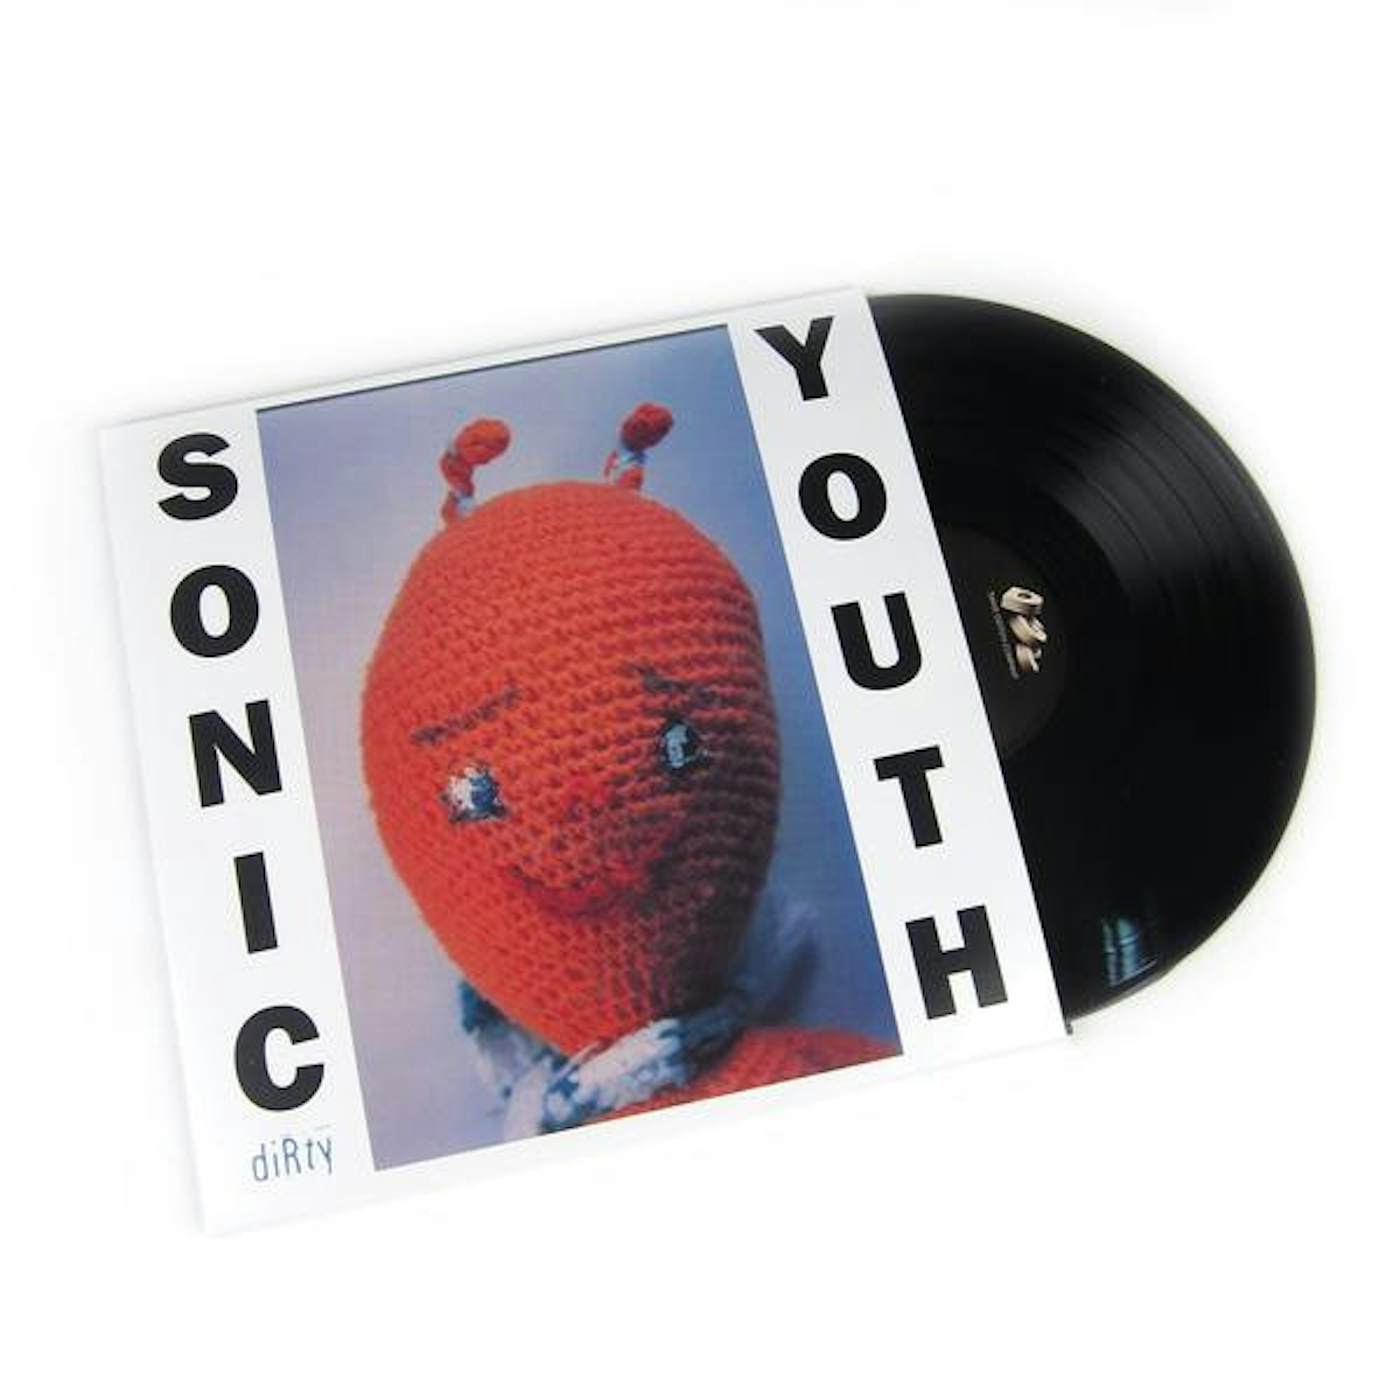 Sonic Youth Dirty Vinyl Record